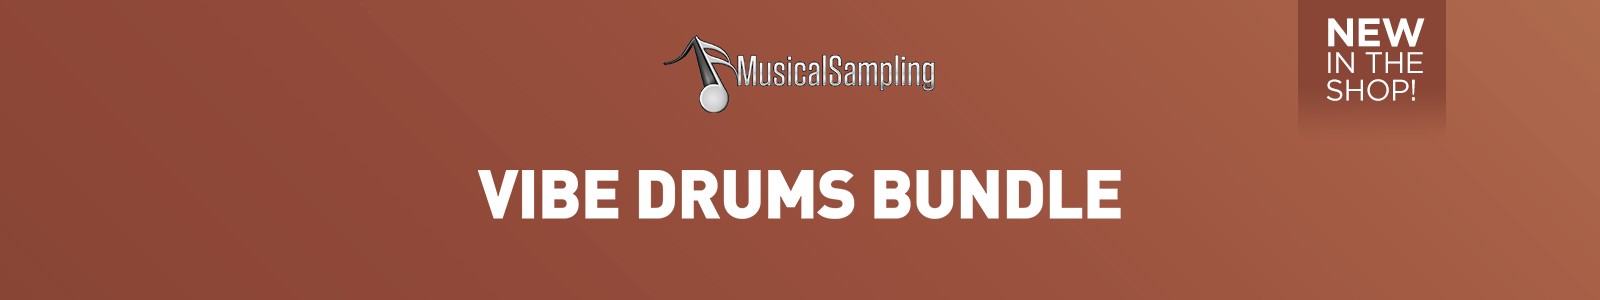 MusicalSampling Vibe Drums Bundle